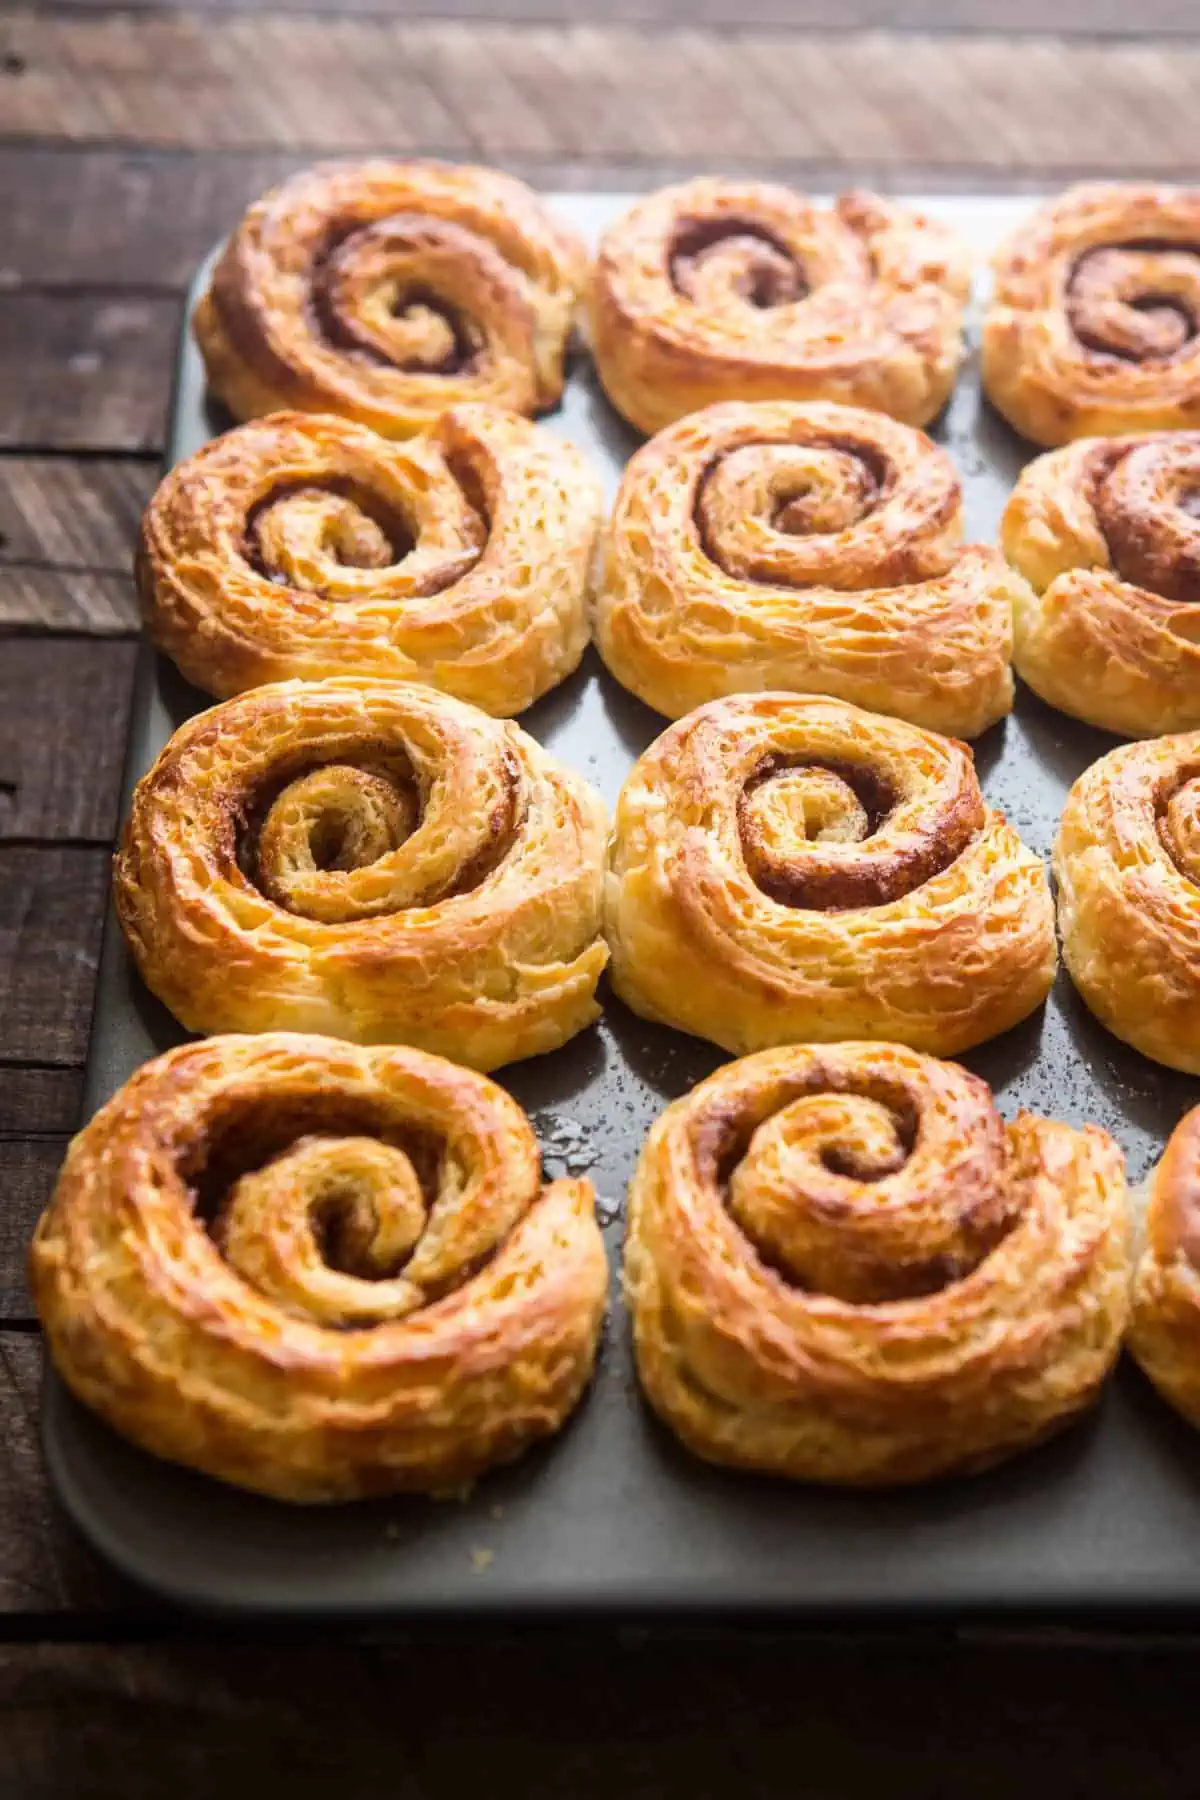 Baked spiral croissant morning buns on a hot baking sheet.